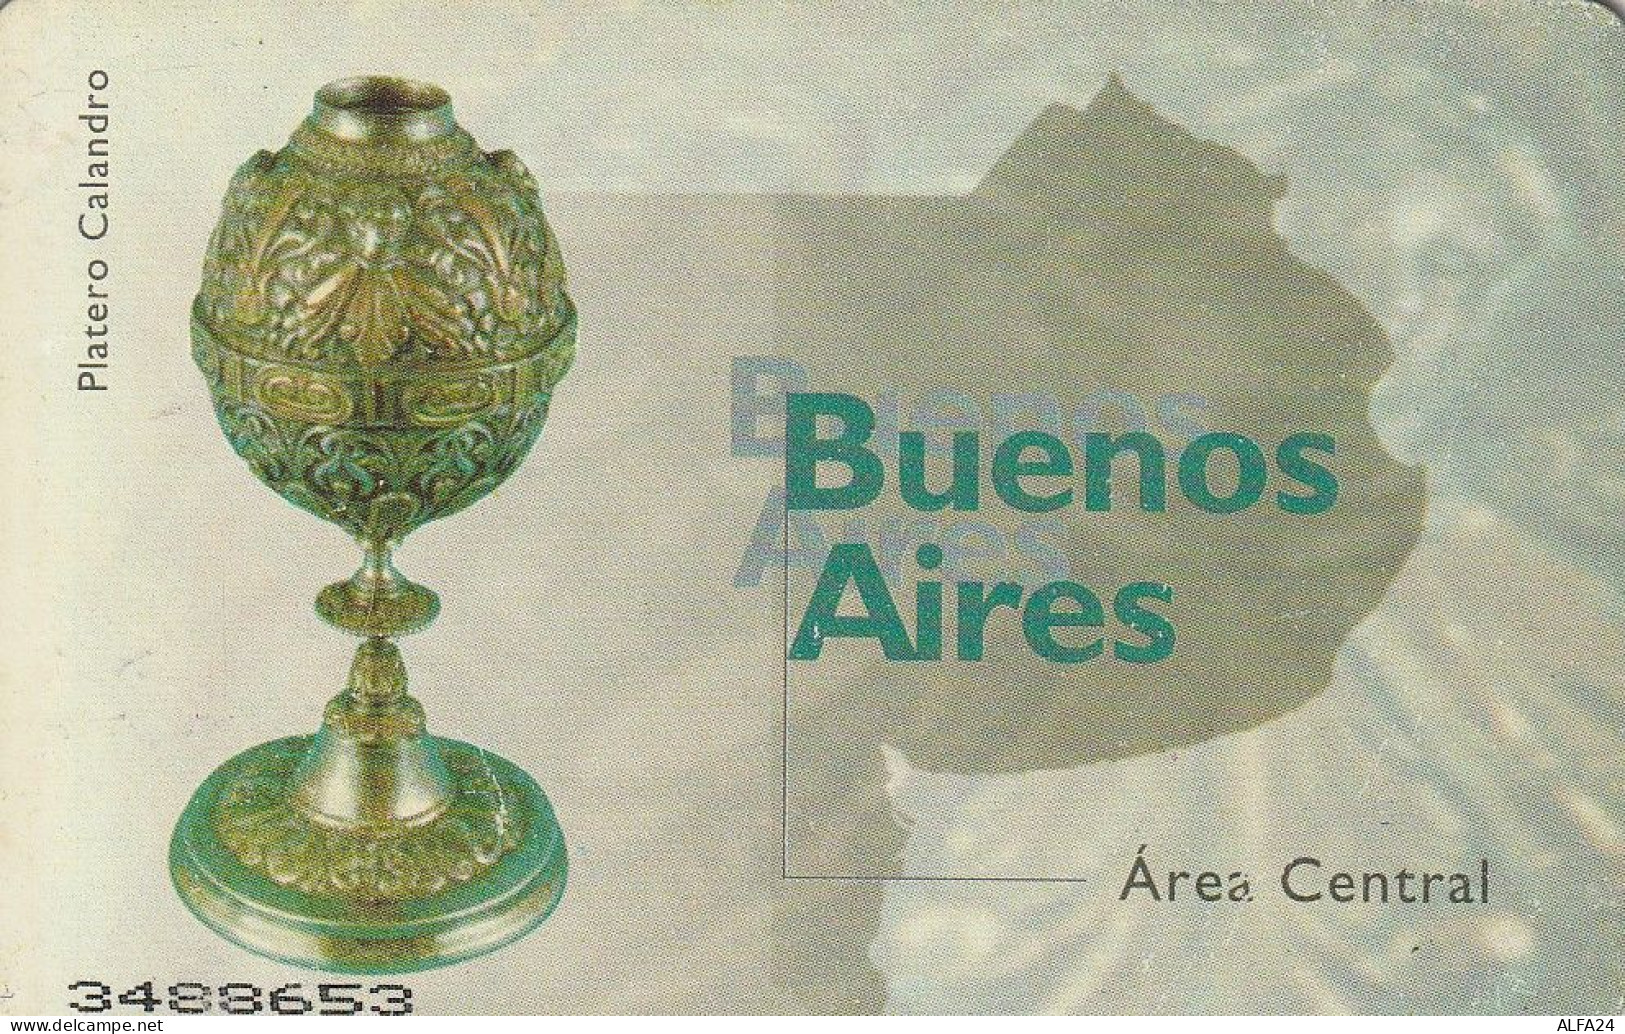 PHONE CARD ARGENTINA  (CV6779 - Argentine